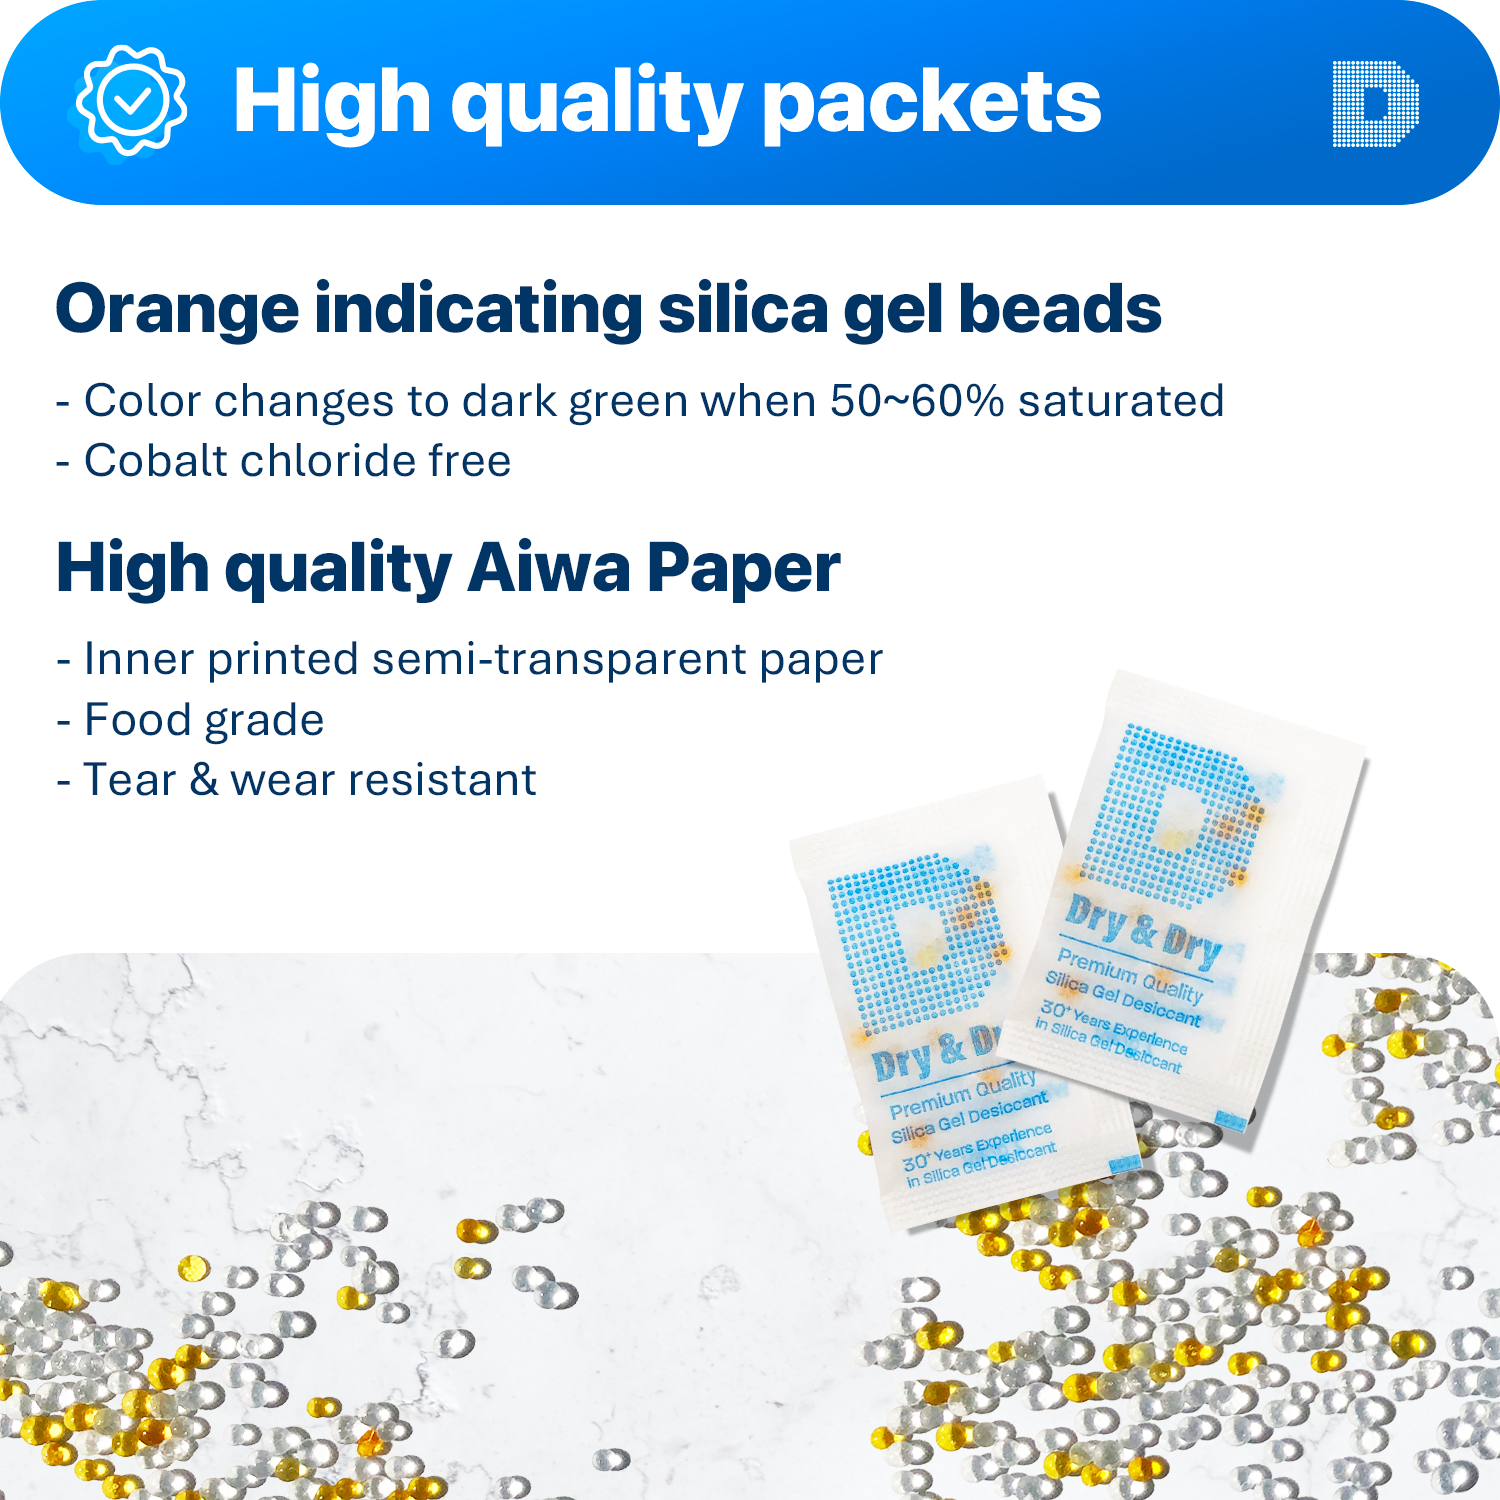 2 Gram [6000 Packs] "Dry & Dry" Food Safe Orange Indicating (Orange to Dark Green) Mixed Silica Gel Packets - FDA Compliant